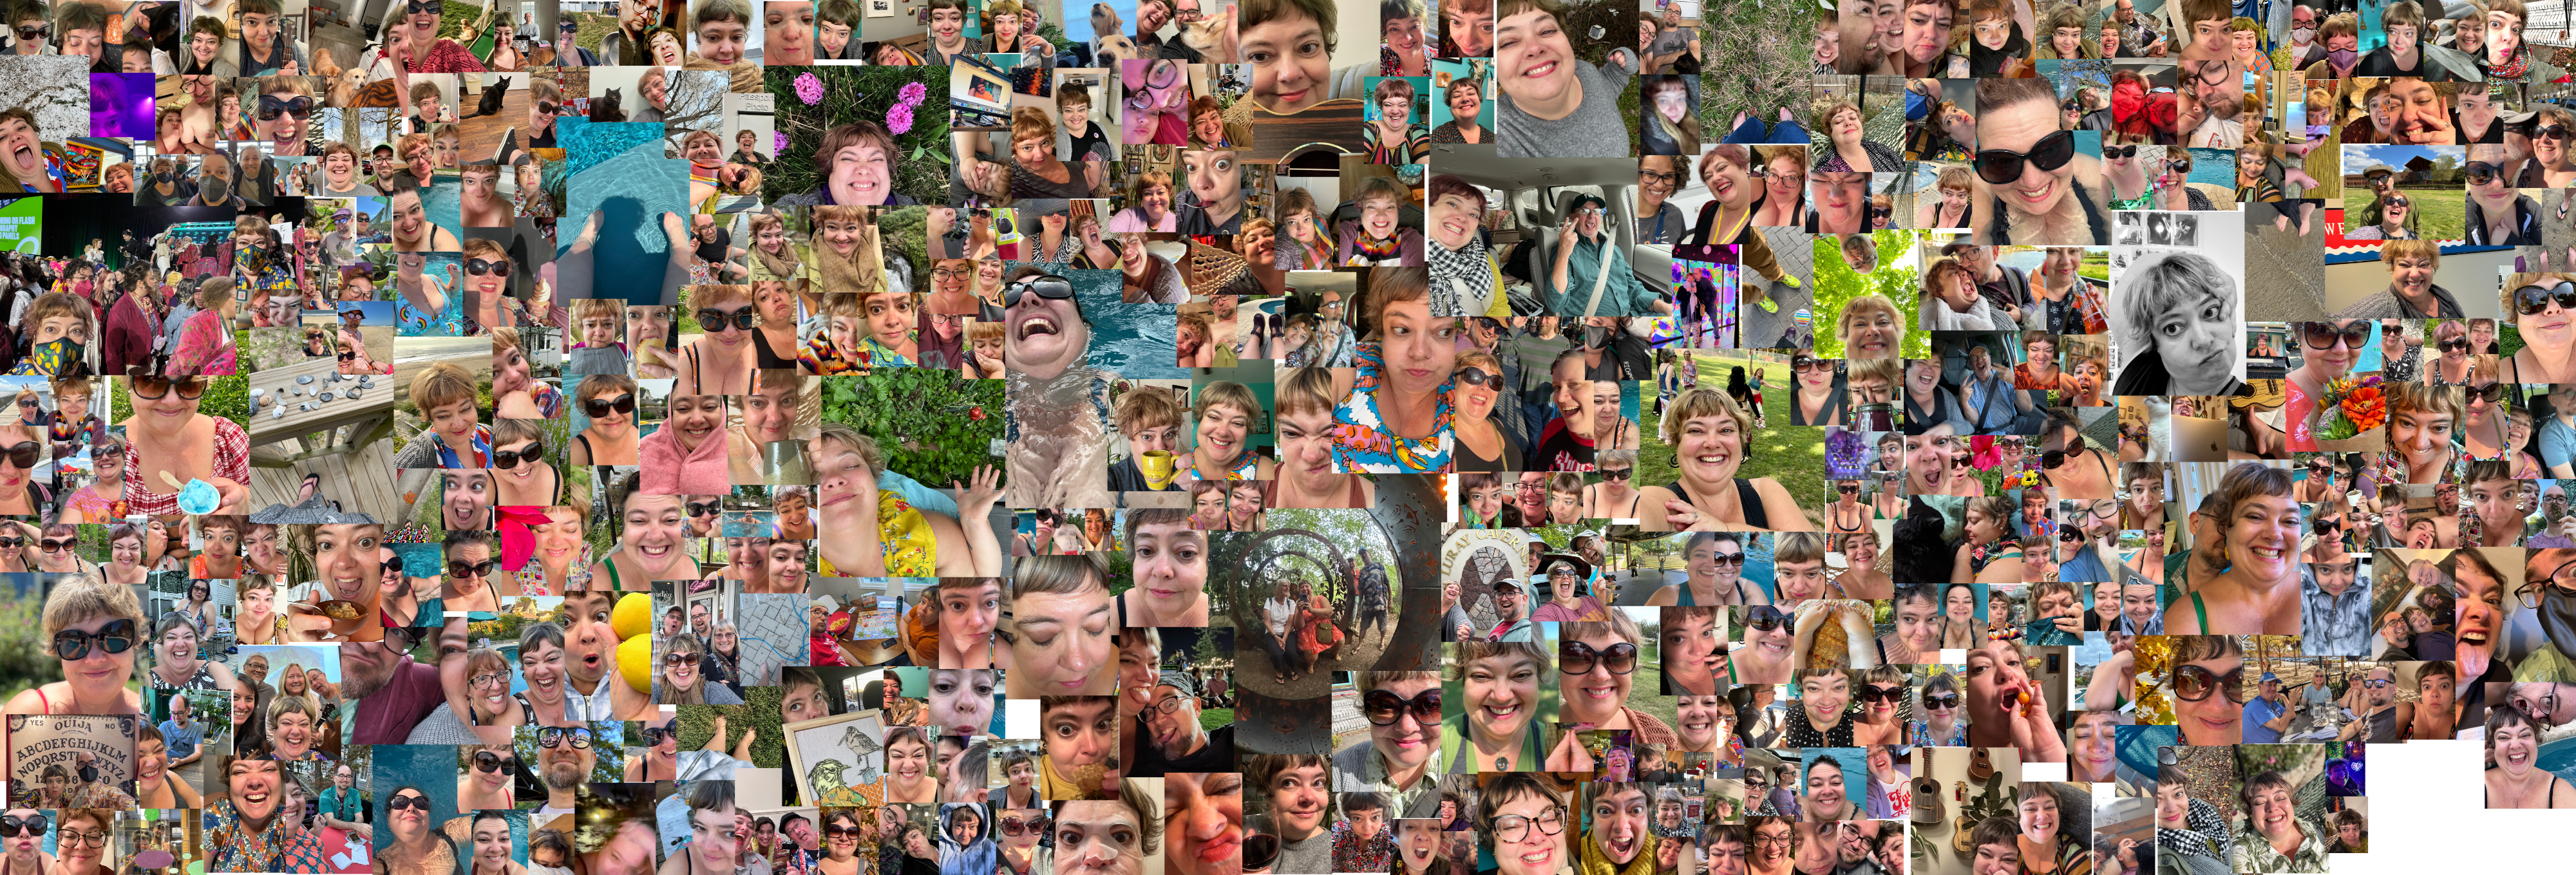 i took 300+ selfies this year